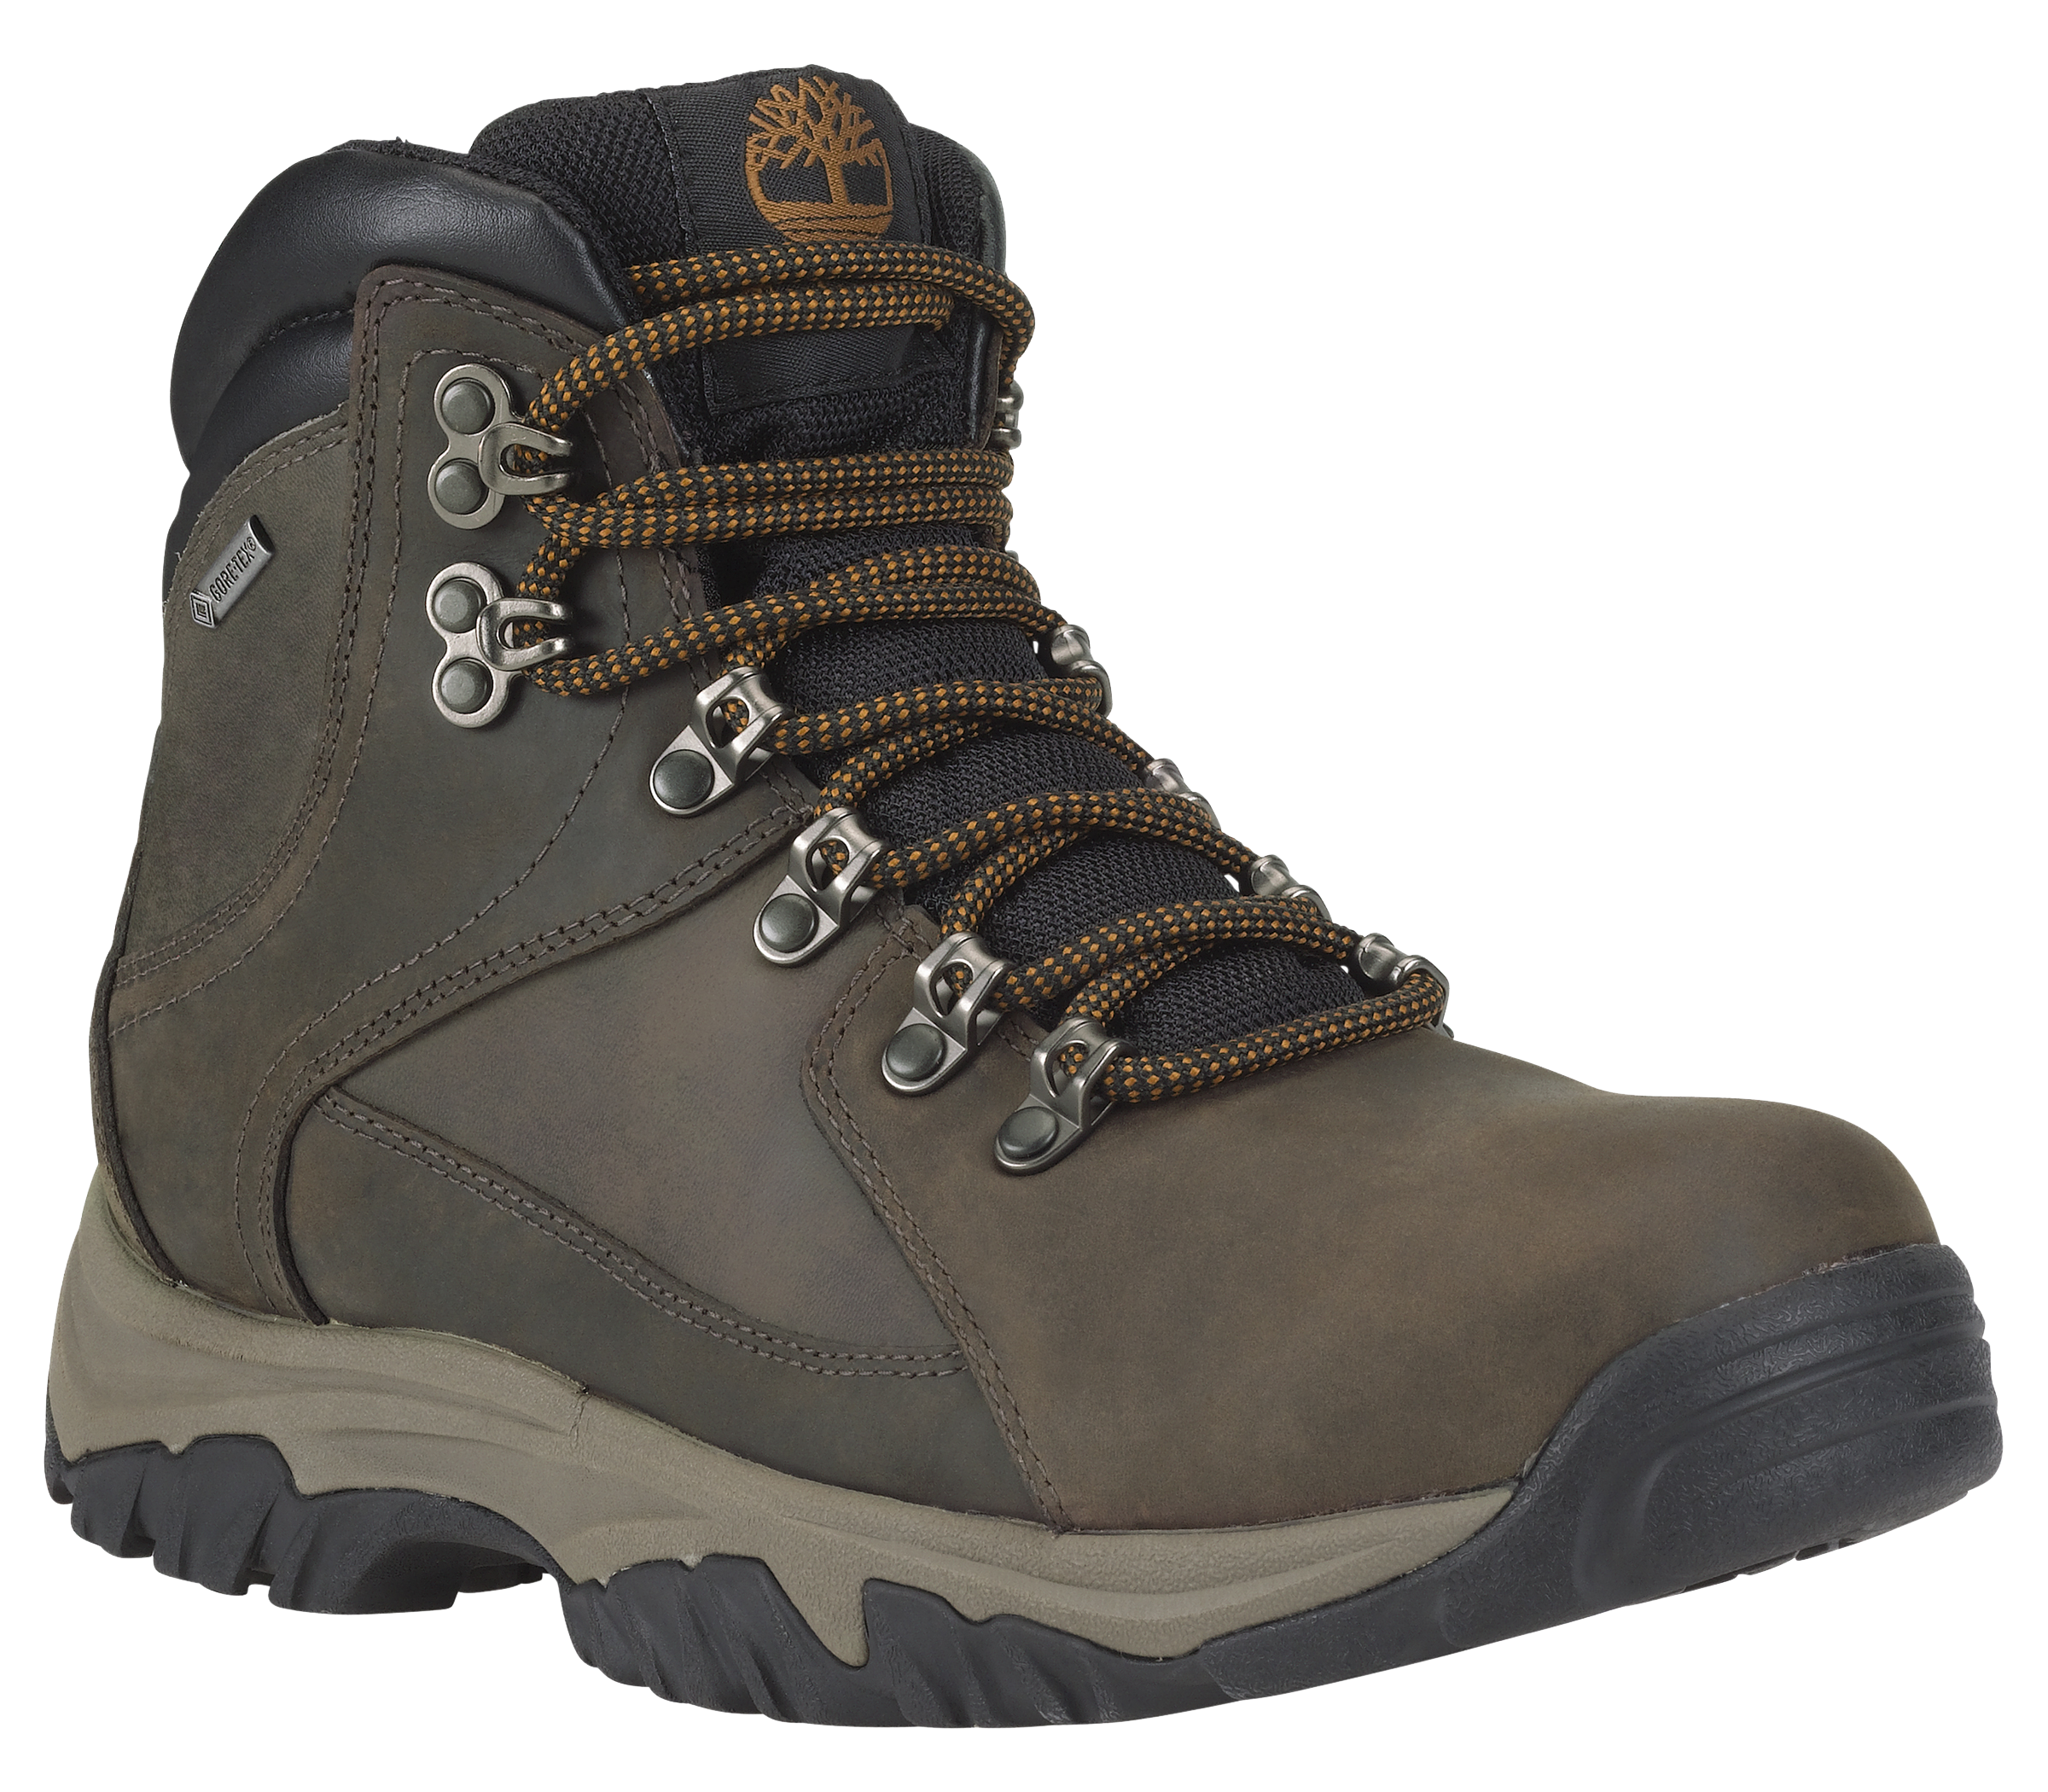 Timberland Thorton Mid GORE-TEX Hiking Boots for Men - Dark Brown ...